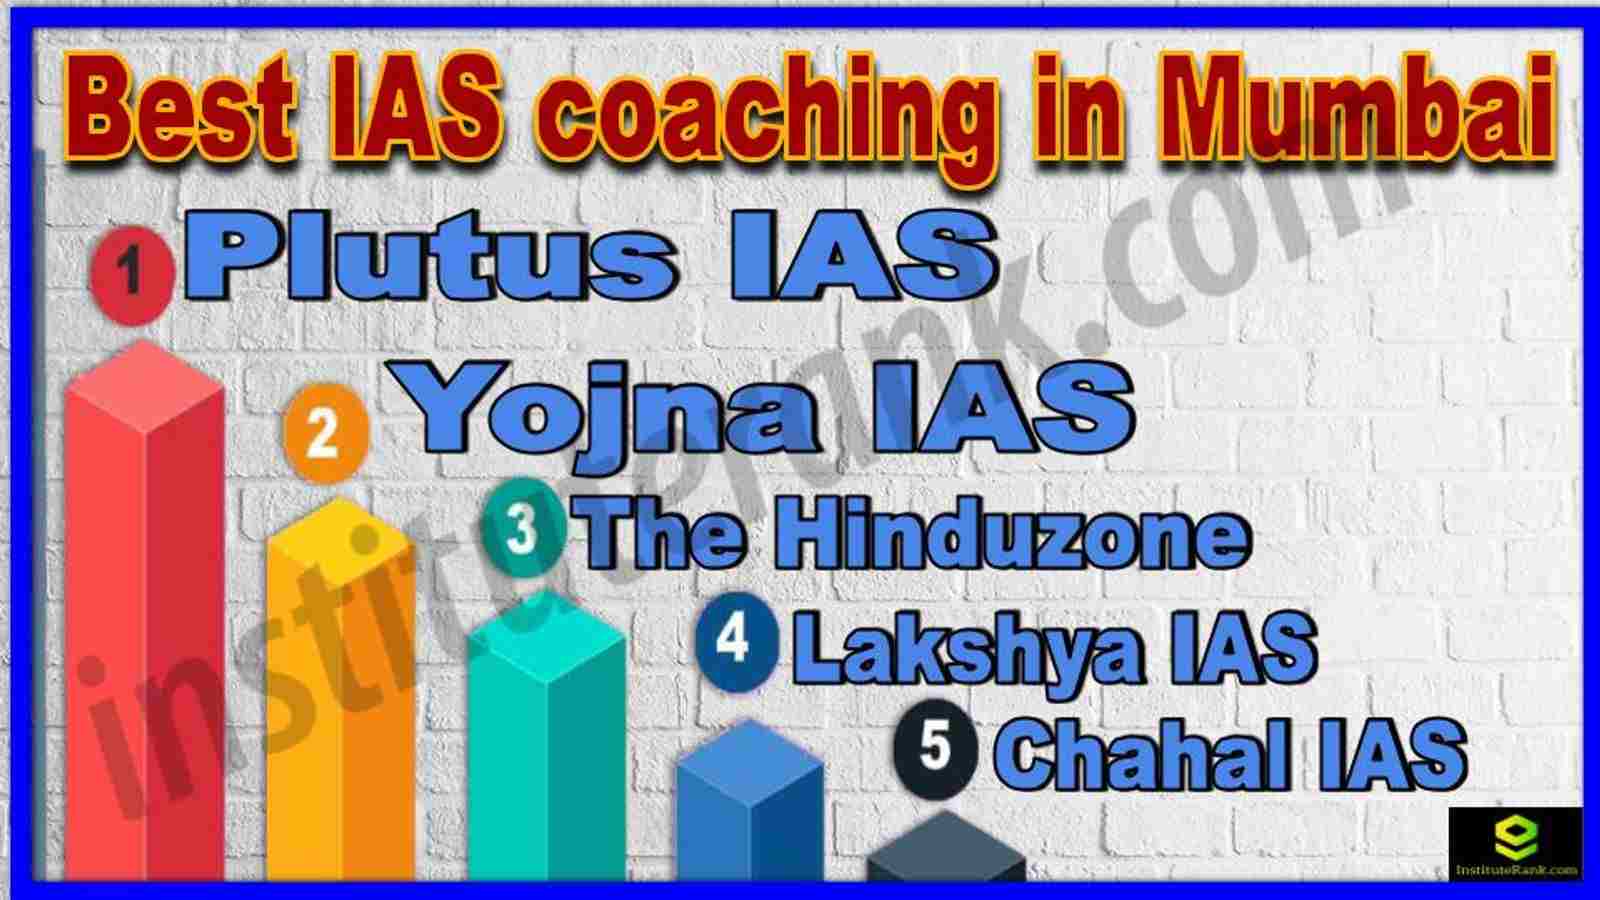 Best IAS Coaching in Mumbai